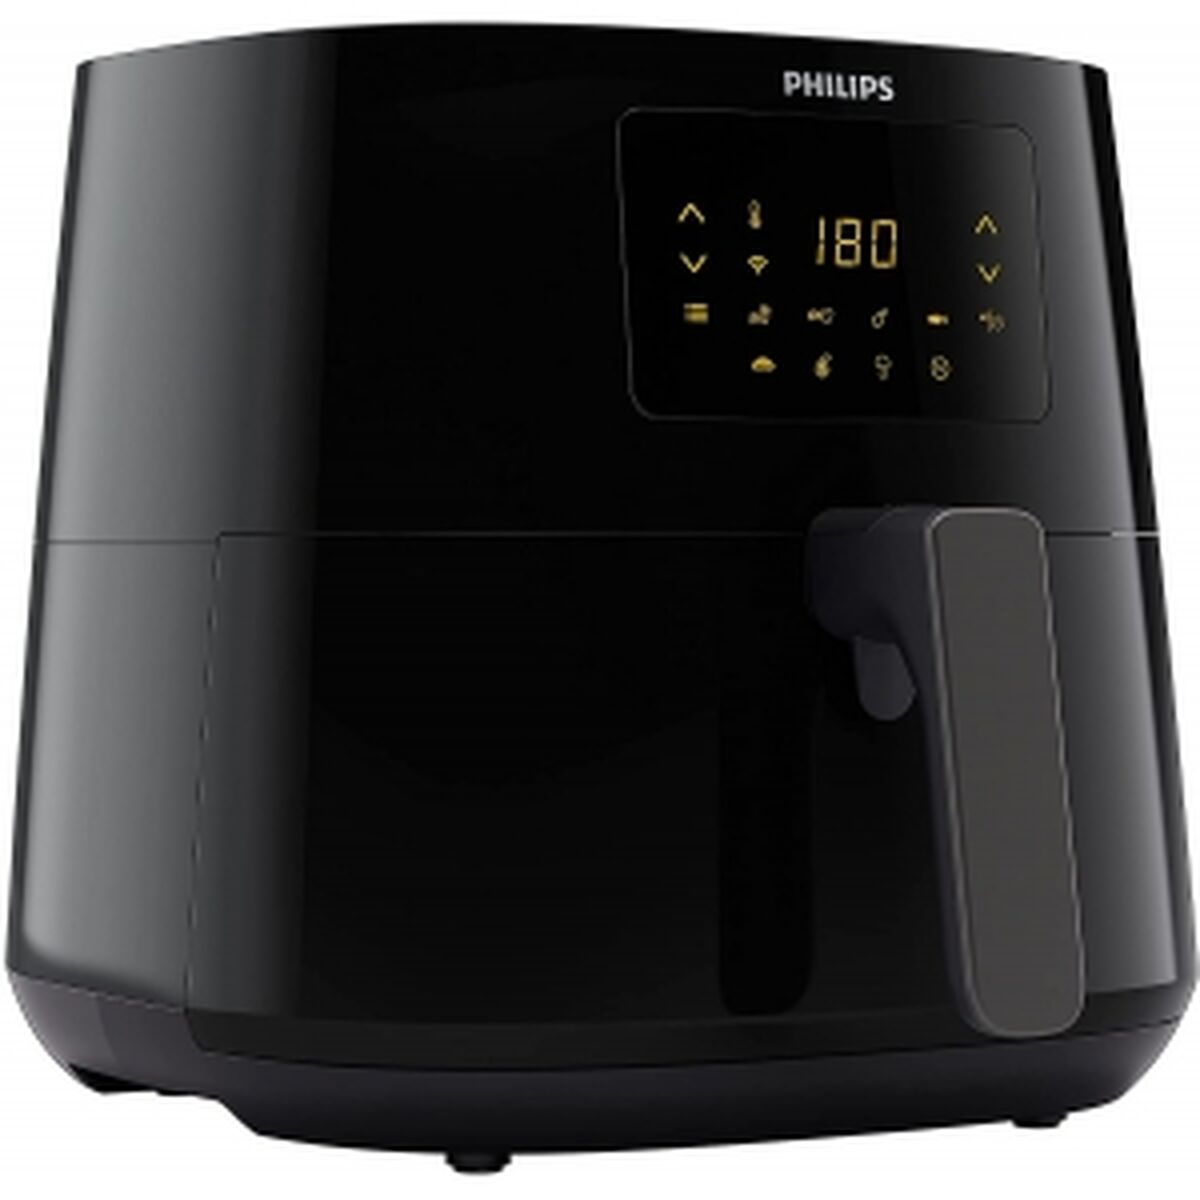 No-Oil Fryer Philips HD9200/90 Sort 1400 W White 4,1 L